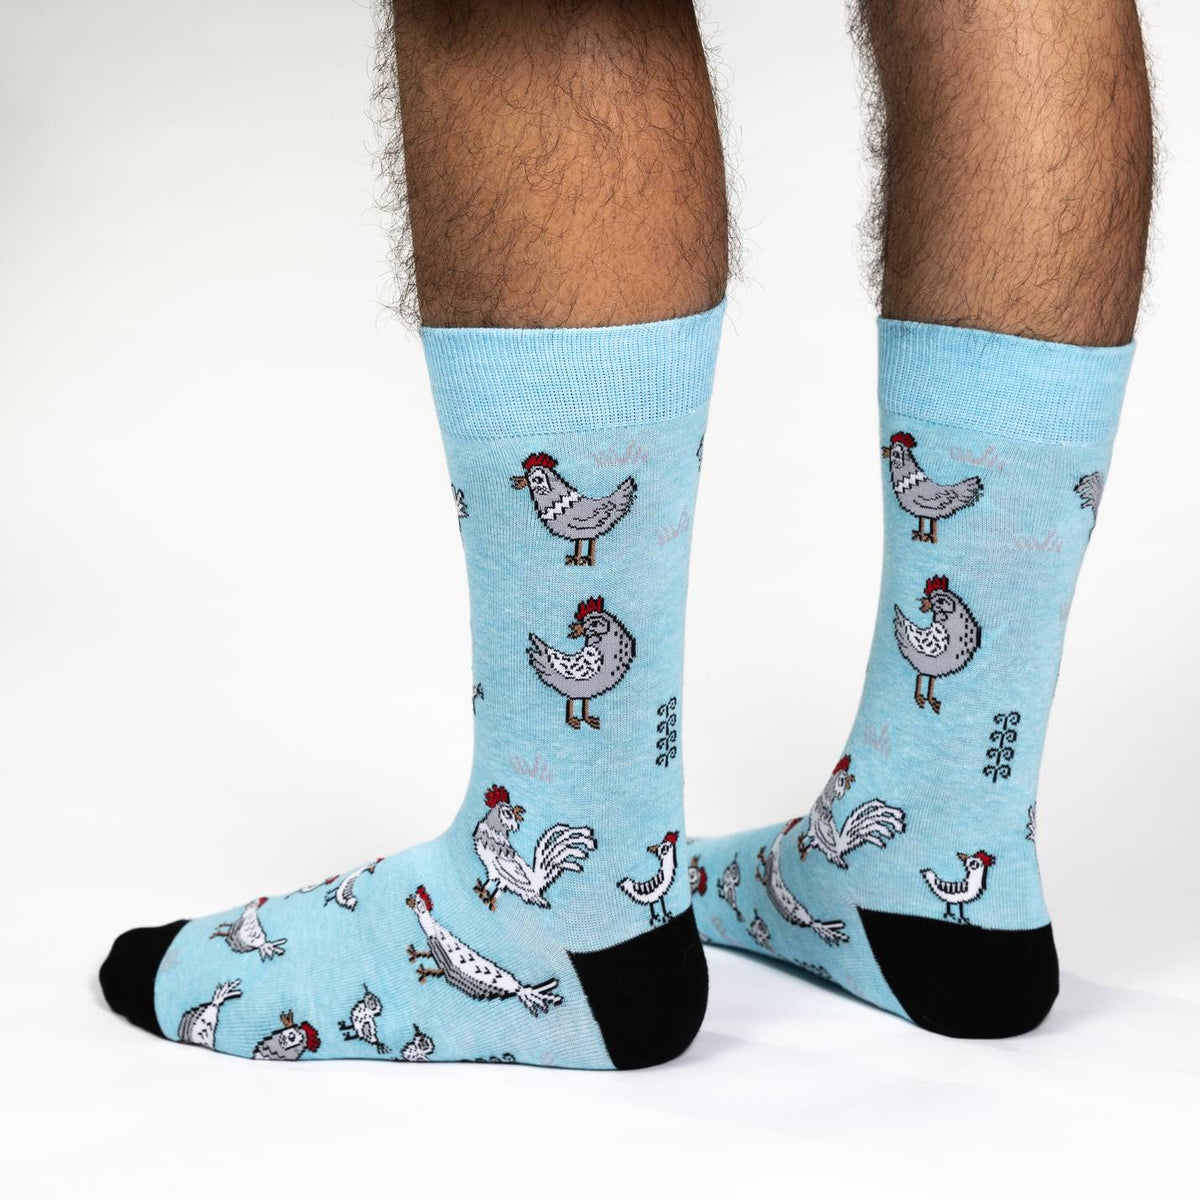 Men's King Size Chickens Socks